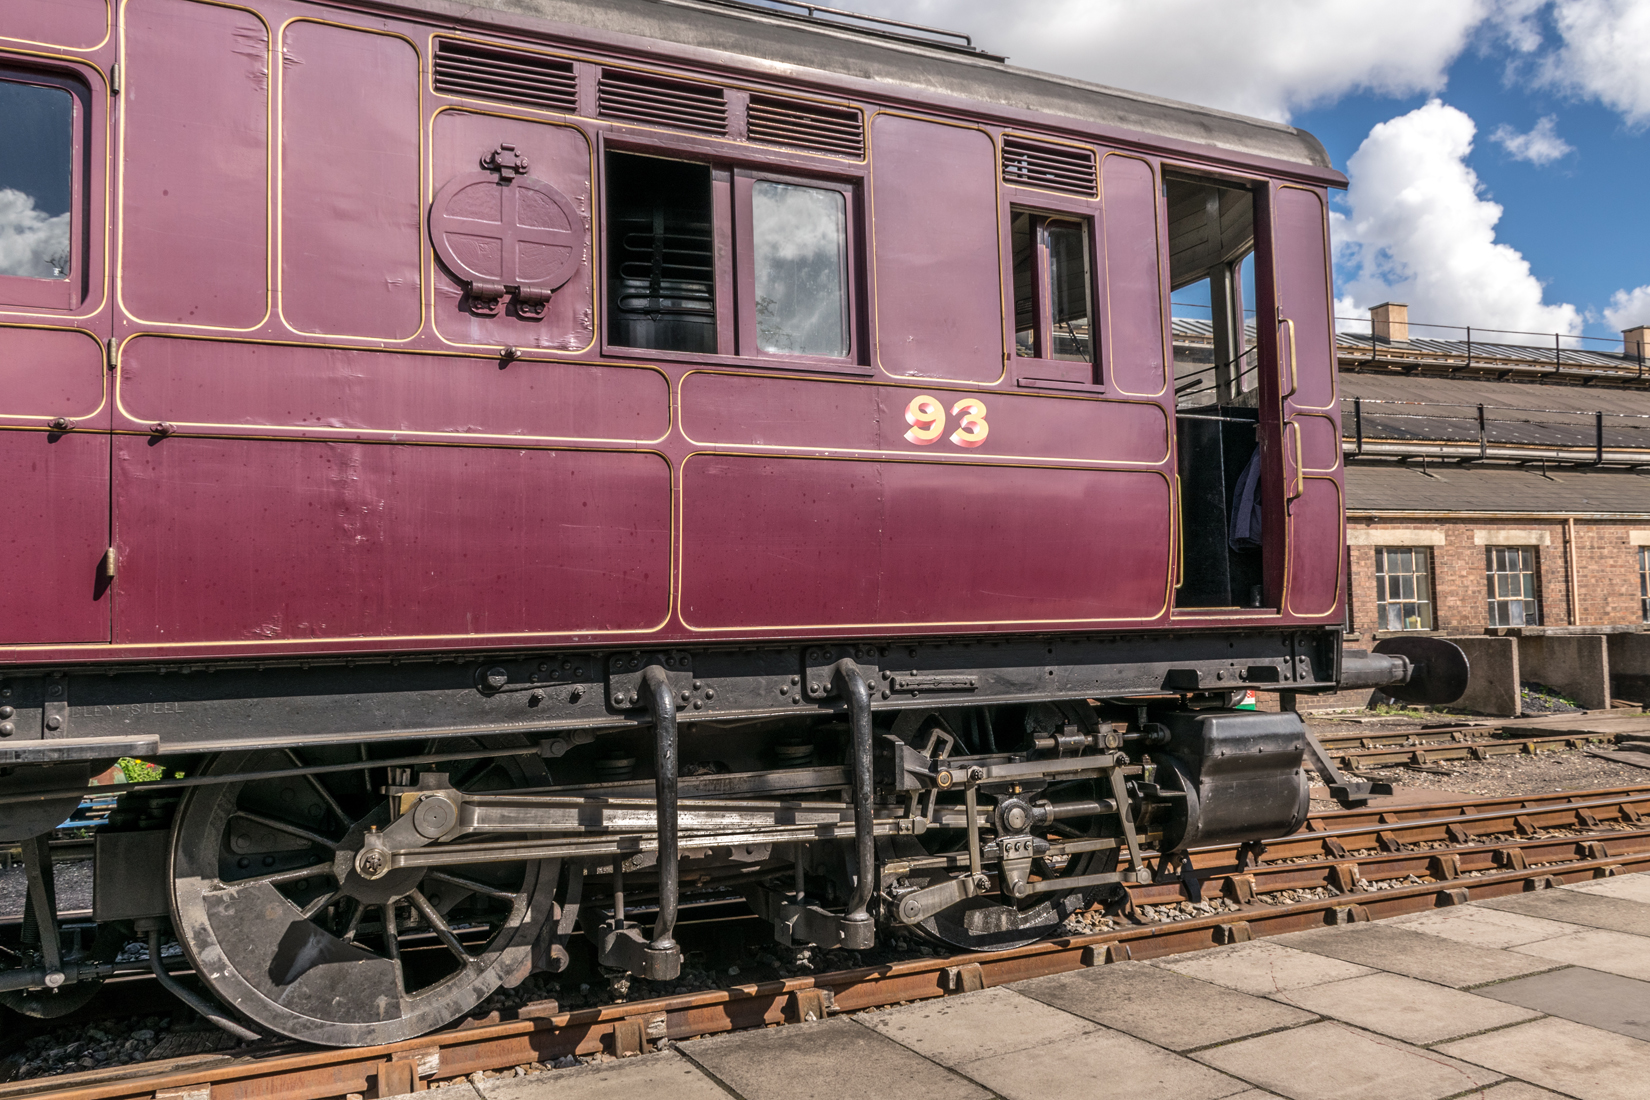 Steam Railmotor number 93